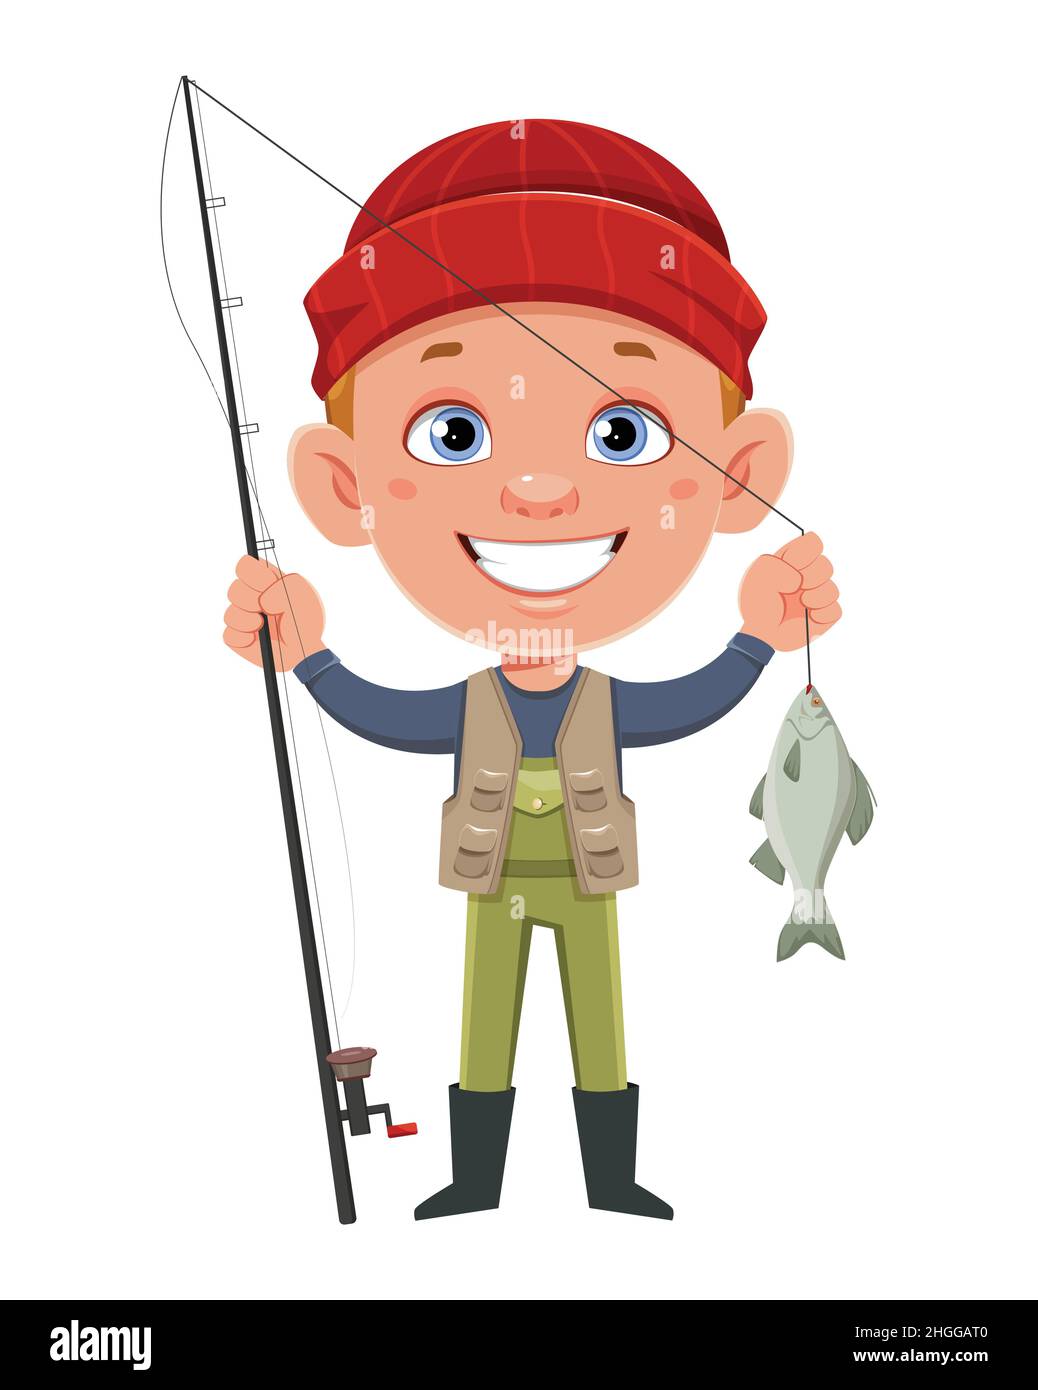 Funny Angler Cartoon Bring Fish and Fishing Equipment Stock